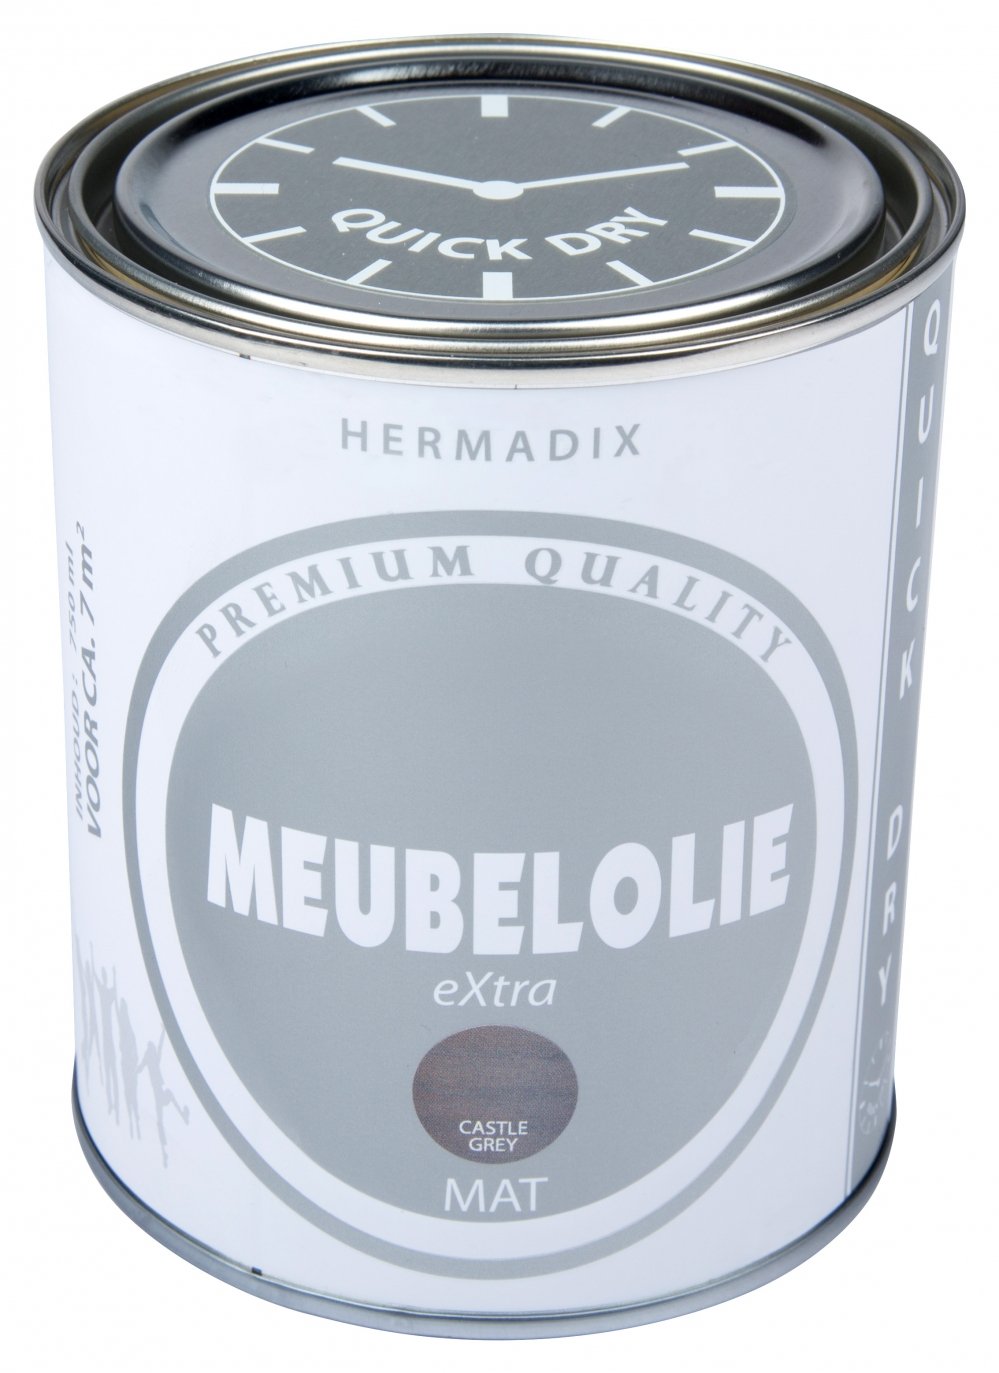 Hermadix - hermadix-meubellolie-extra-mat-castle-grey1-verfcompleet.nl